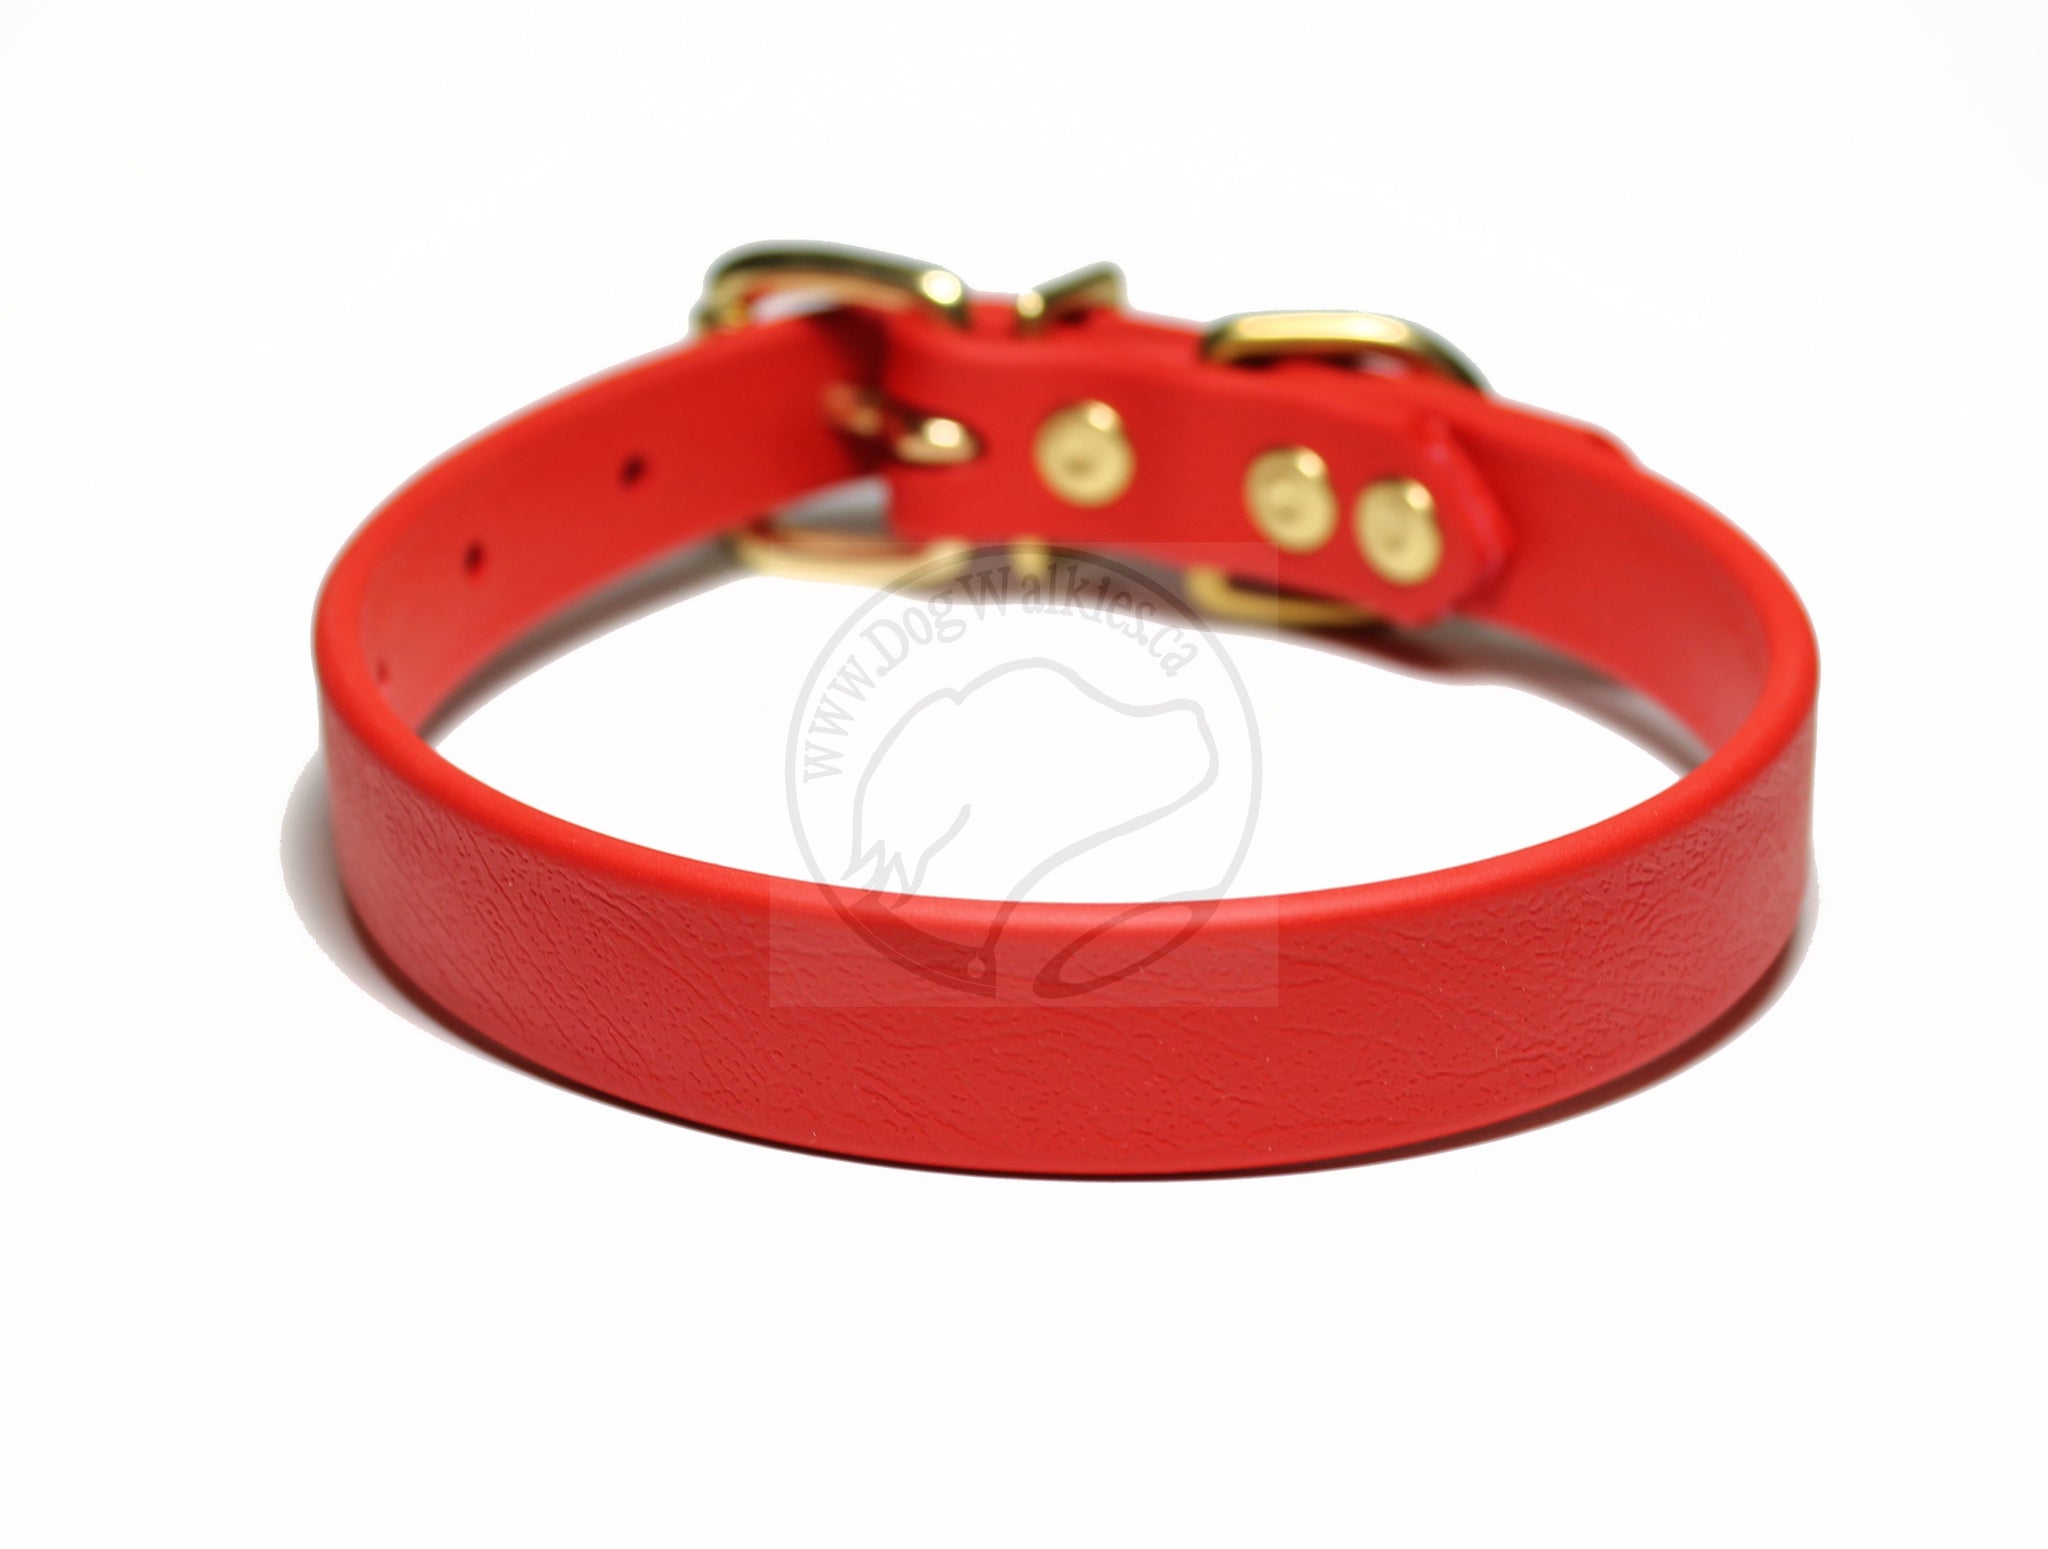 Poppy Red Biothane Dog Collar - 3/4" (20mm) wide